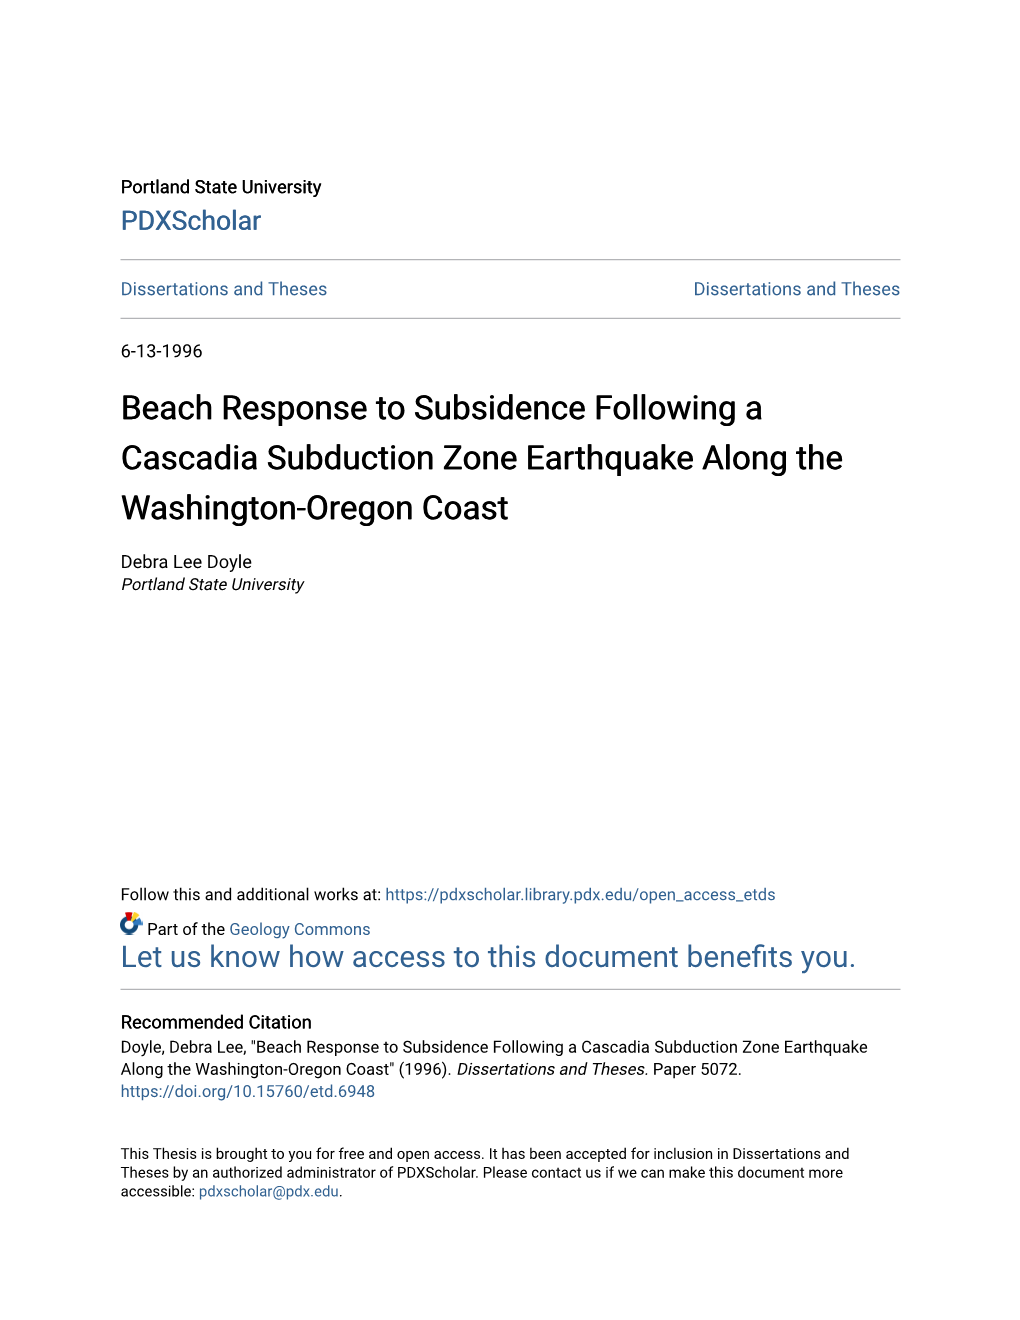 Beach Response to Subsidence Following a Cascadia Subduction Zone Earthquake Along the Washington-Oregon Coast